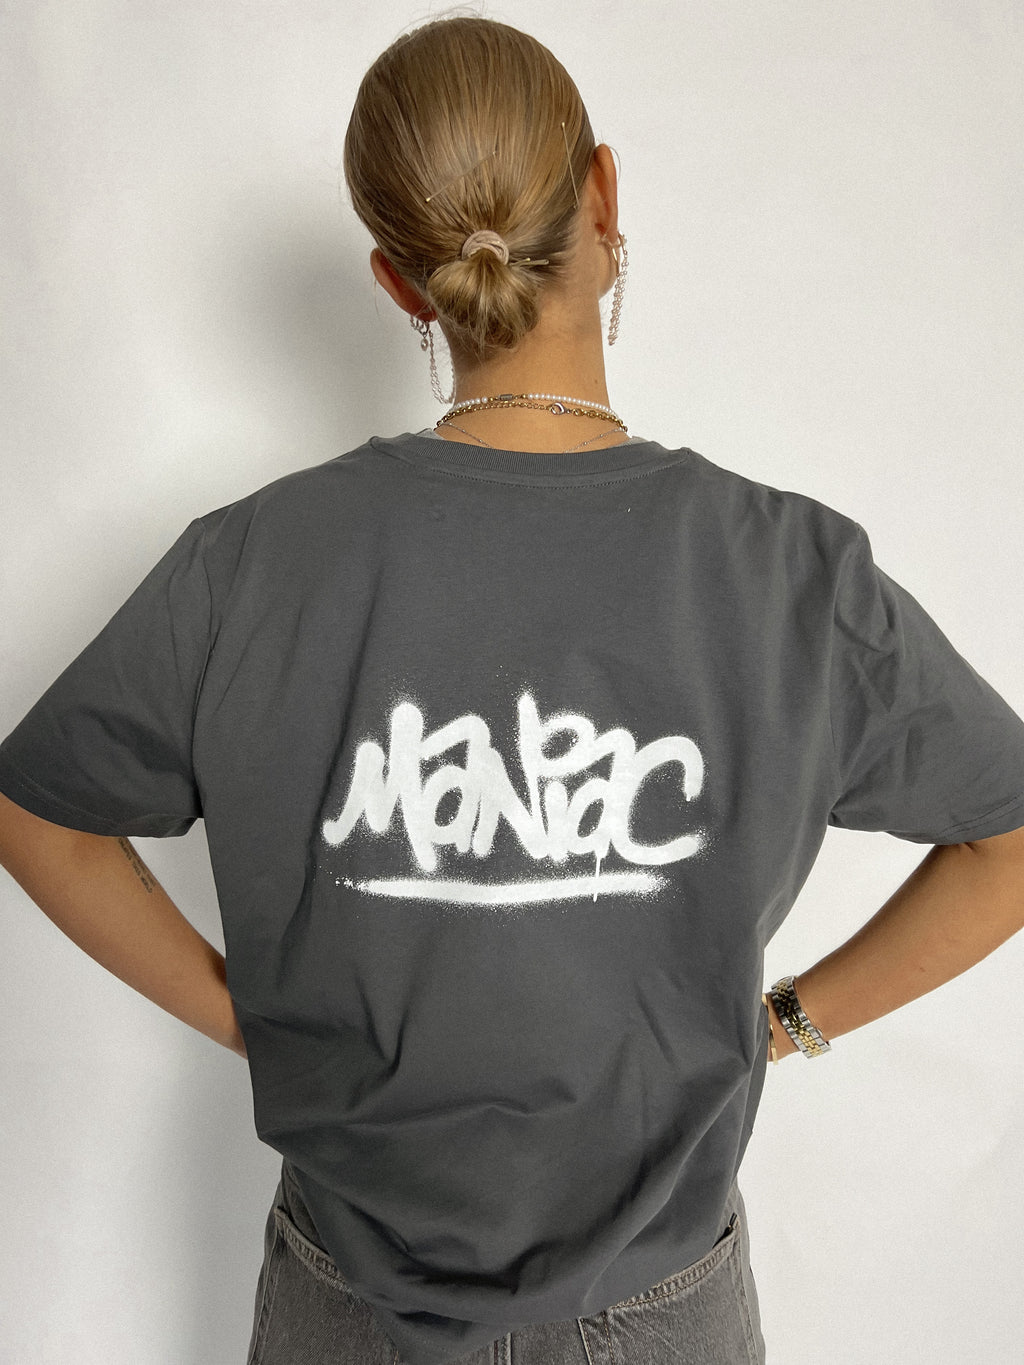 Maniac T-Shirt